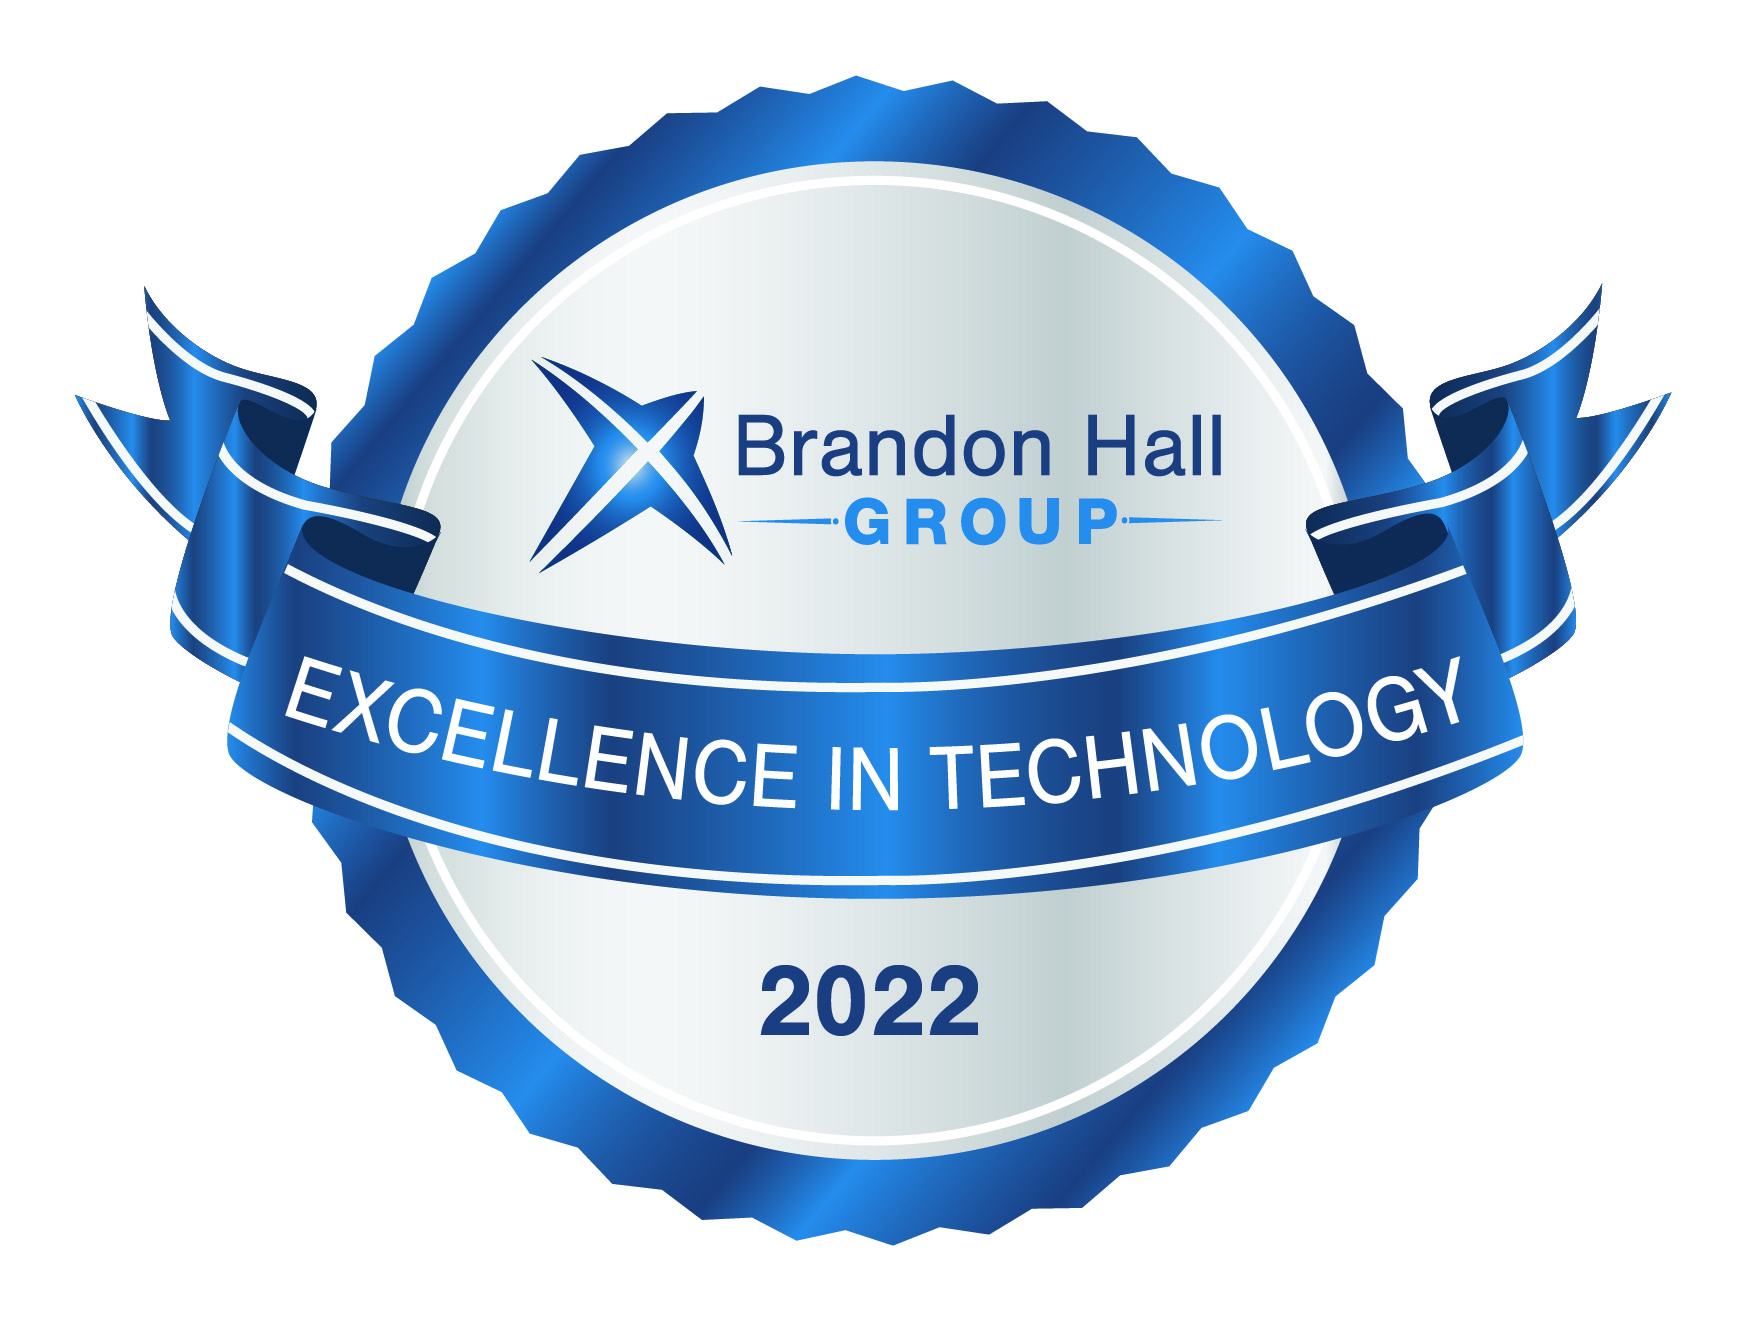 BHG 2022 Technology Award Logo